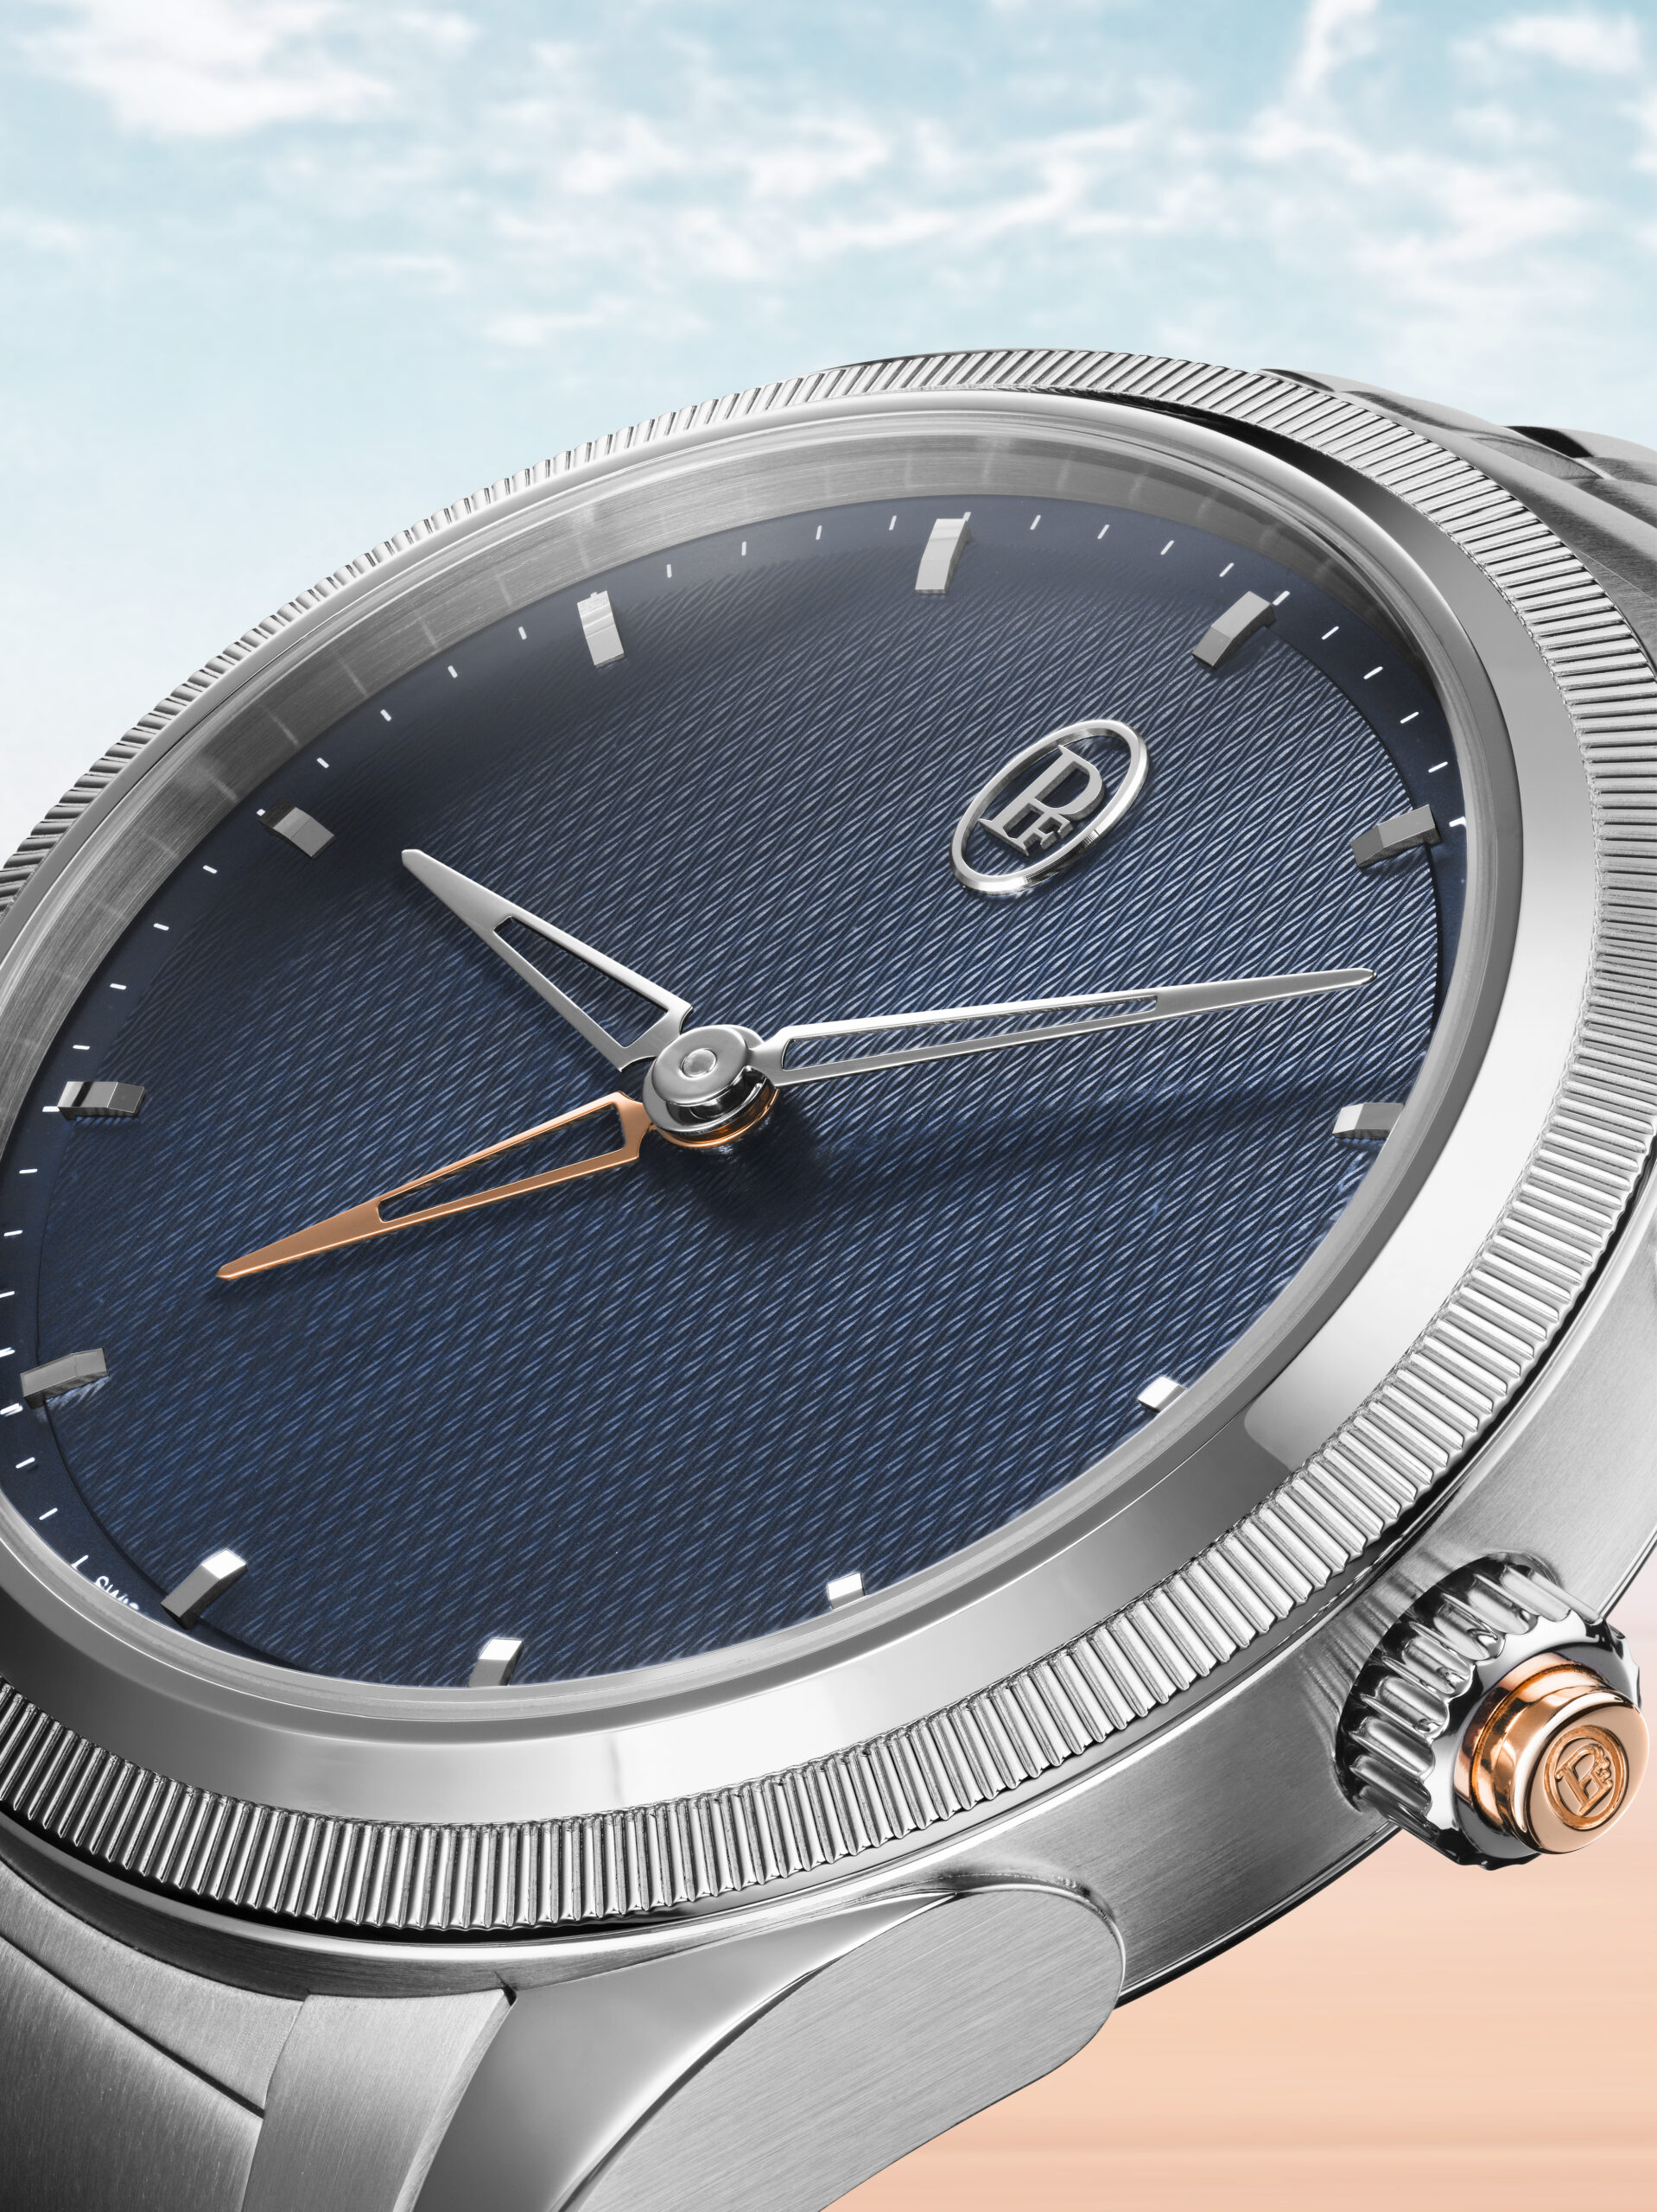 Parmigiani Fleurier Tonda PF GMT Rattrapante watch as seen at Watches & Wonders Geneva 2022. 